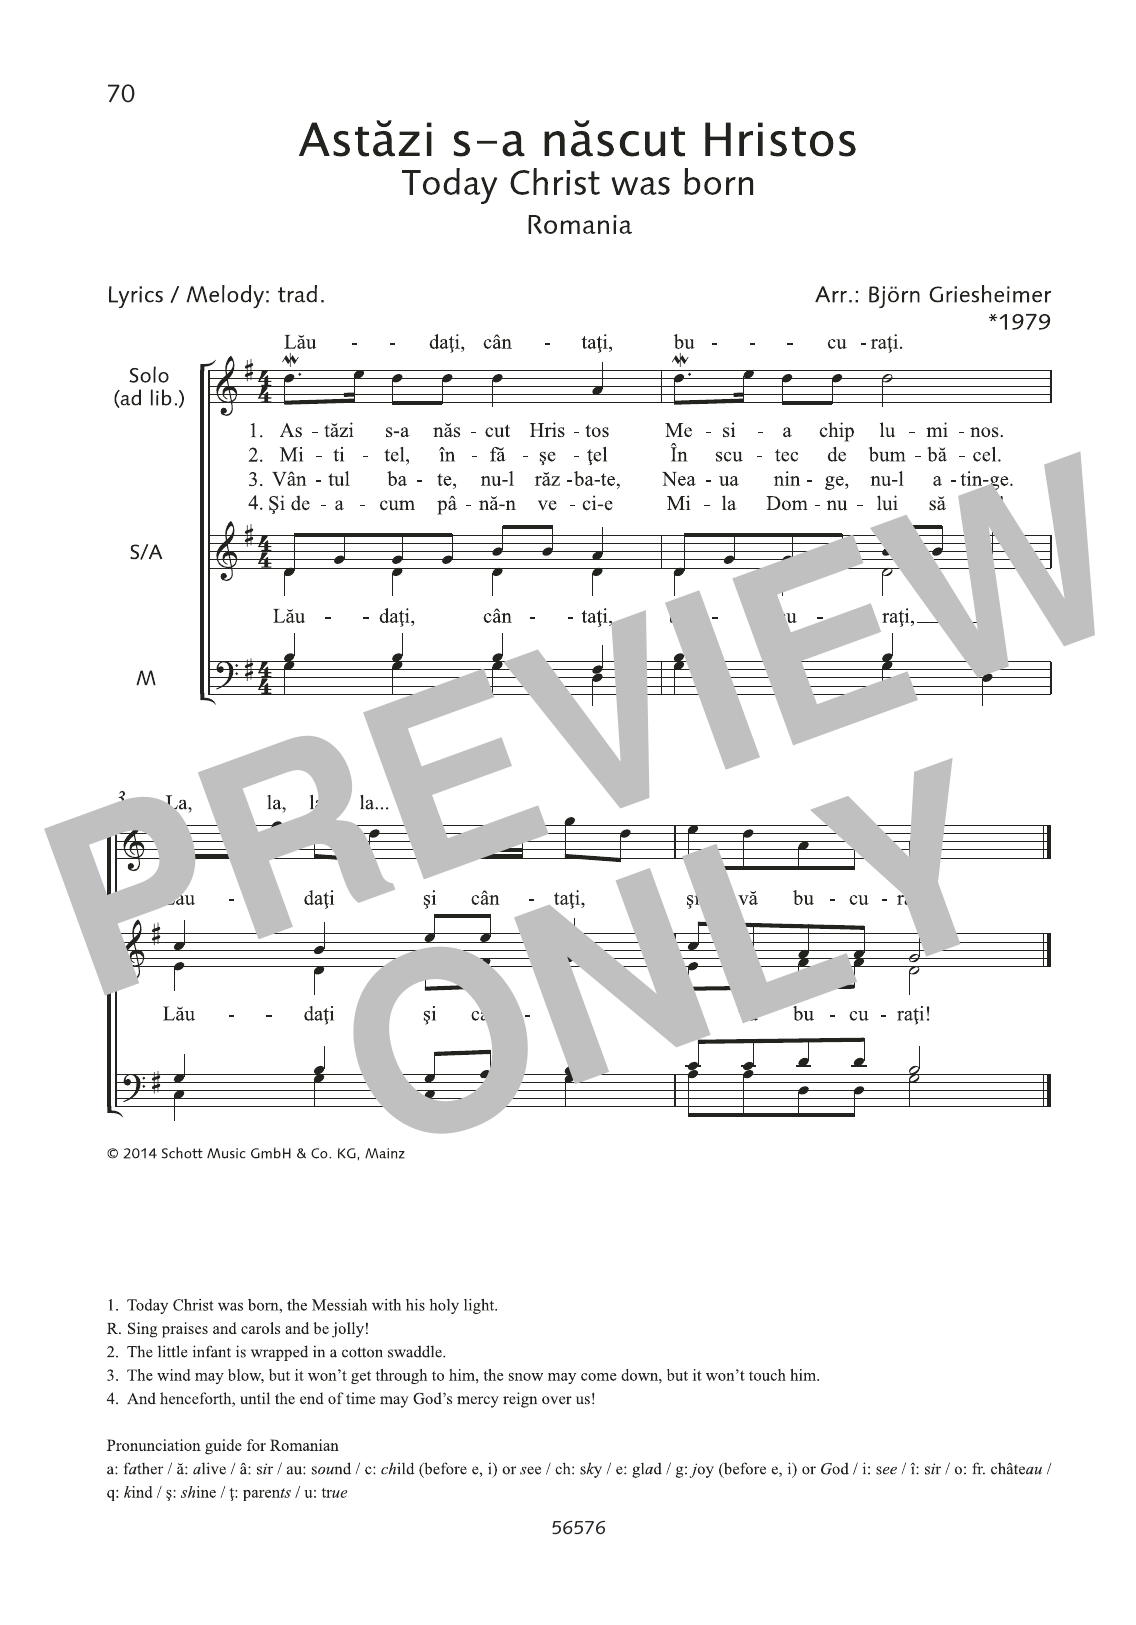 Björn Griesheimer Astazi s-a nascut Hristos Sheet Music Notes & Chords for Choral - Download or Print PDF